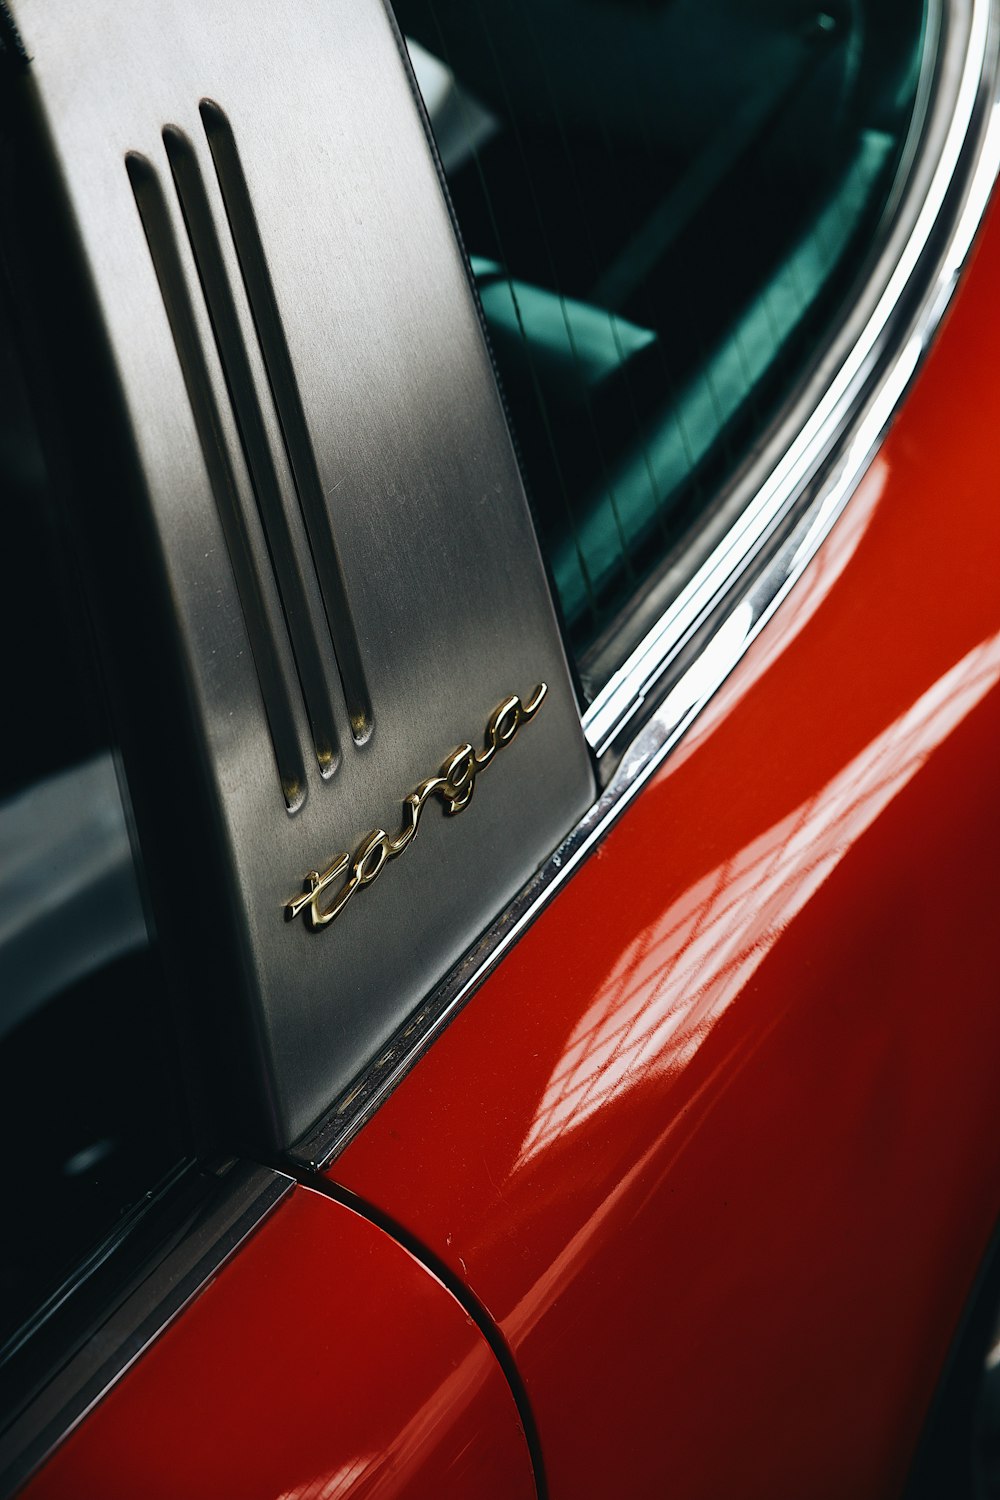 a close up of a car's emblem on a red car